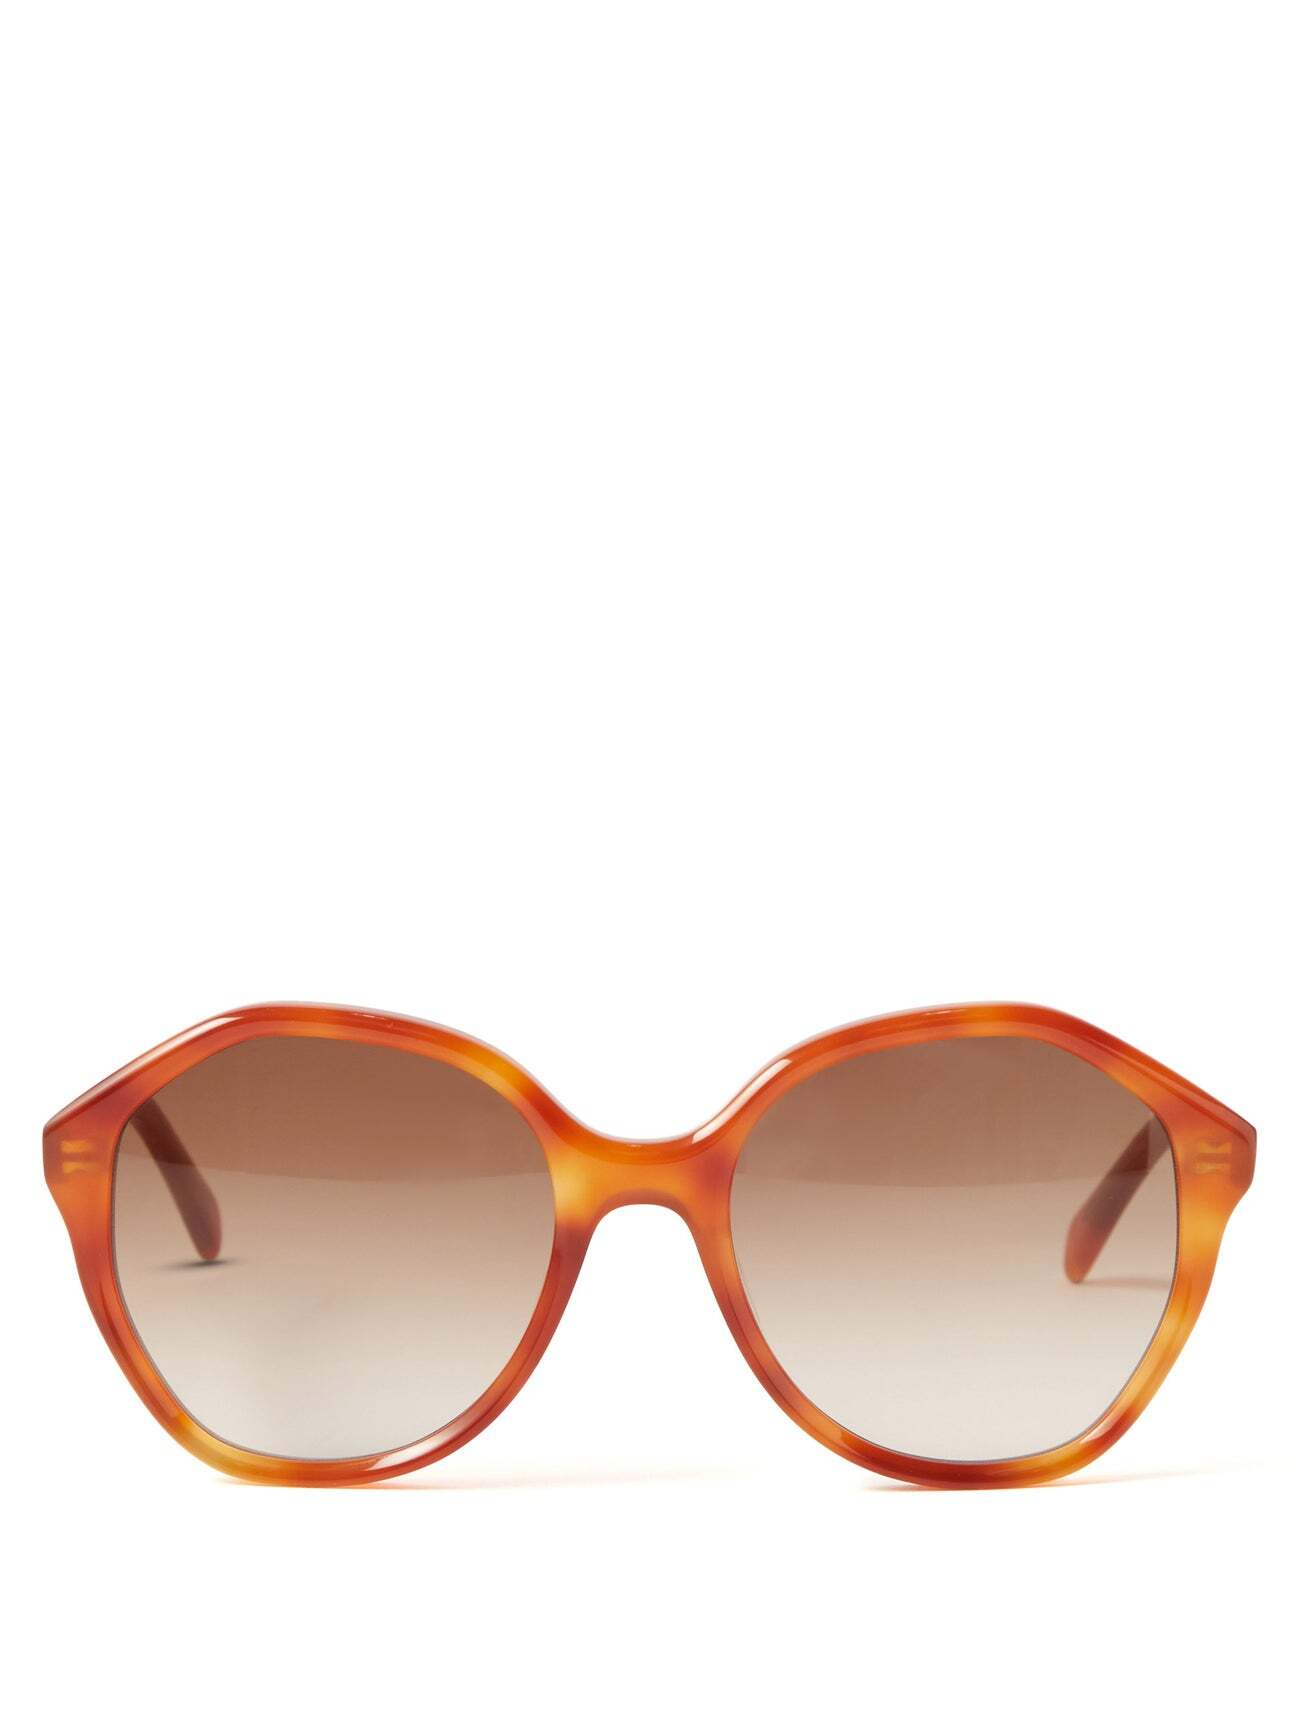 Celine Eyewear - Round Acetate Sunglasses - Womens - Light Brown